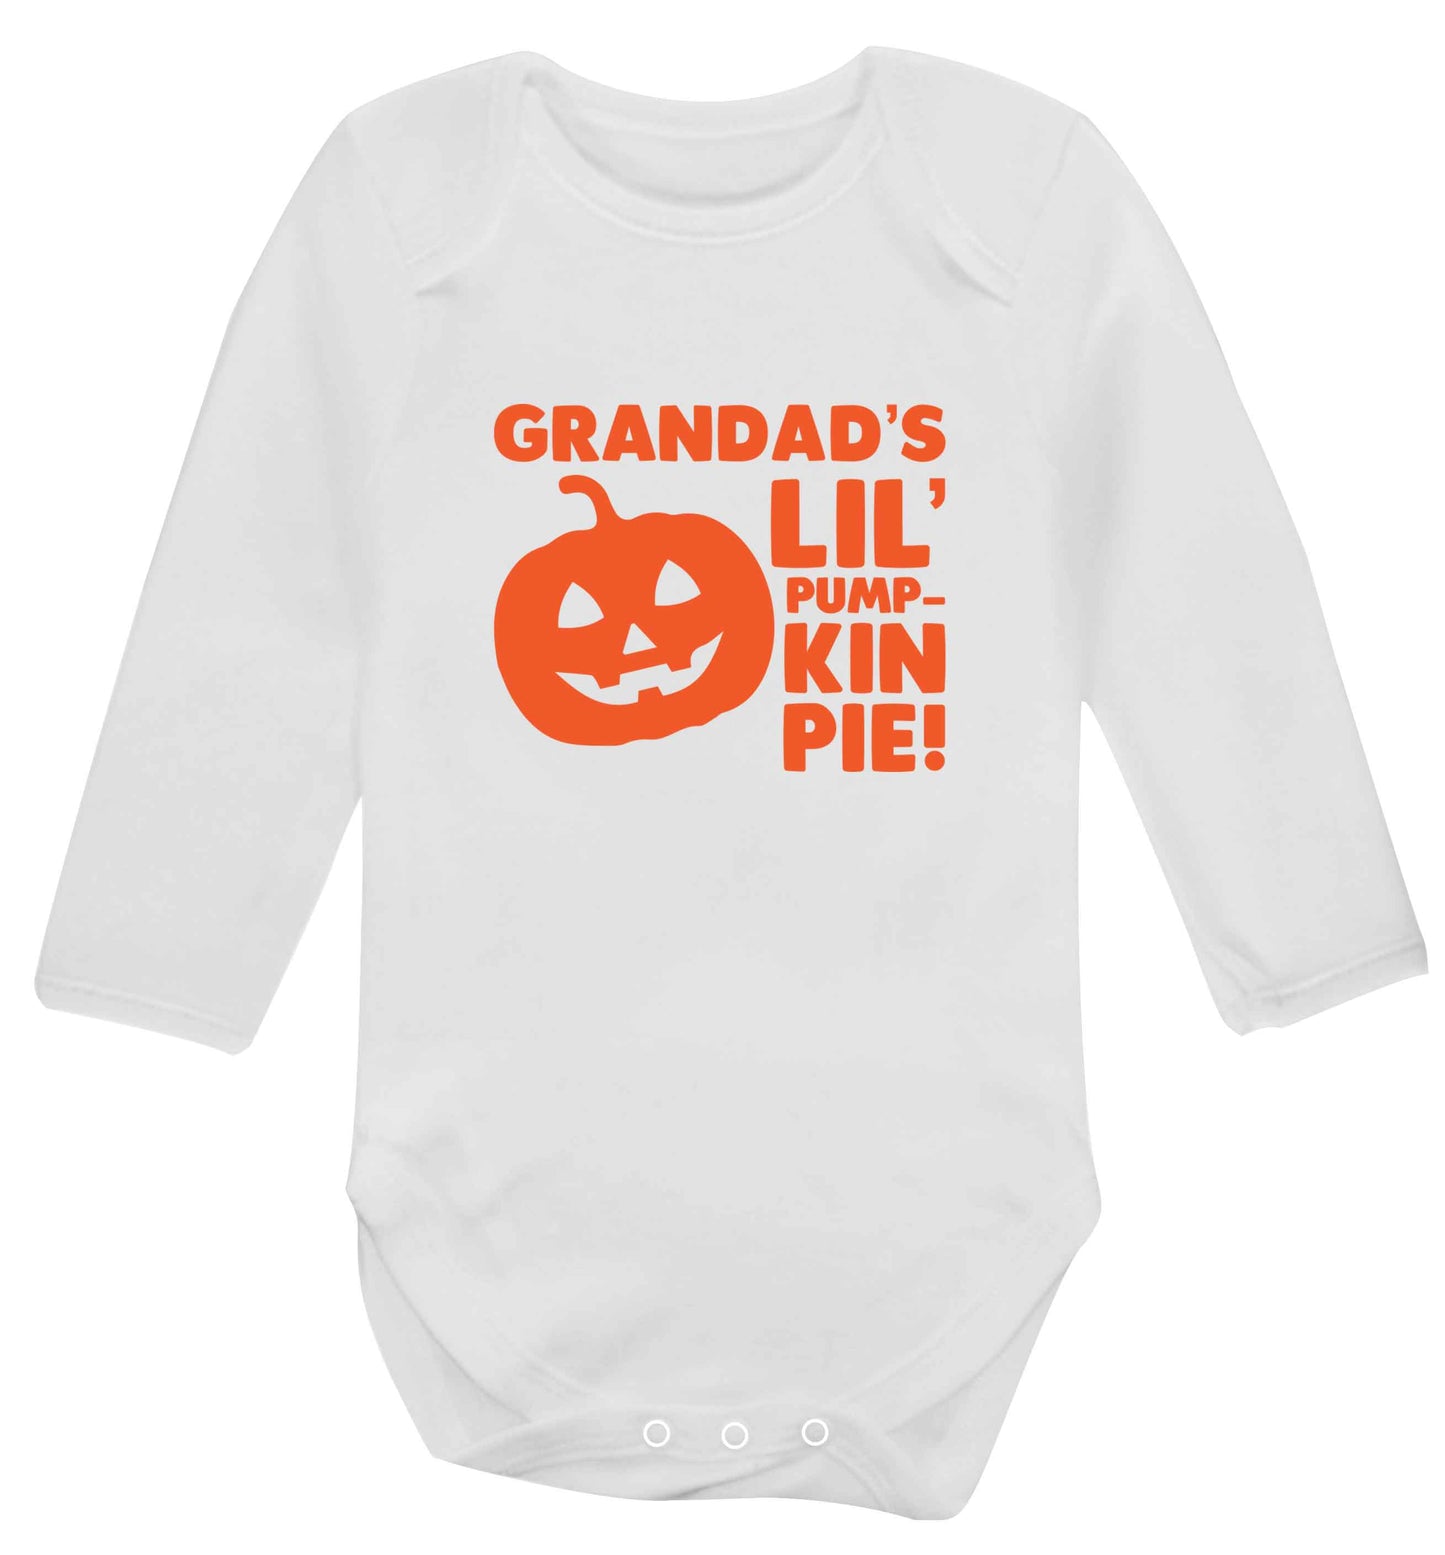 Grandad's lil' pumpkin pie baby vest long sleeved white 6-12 months